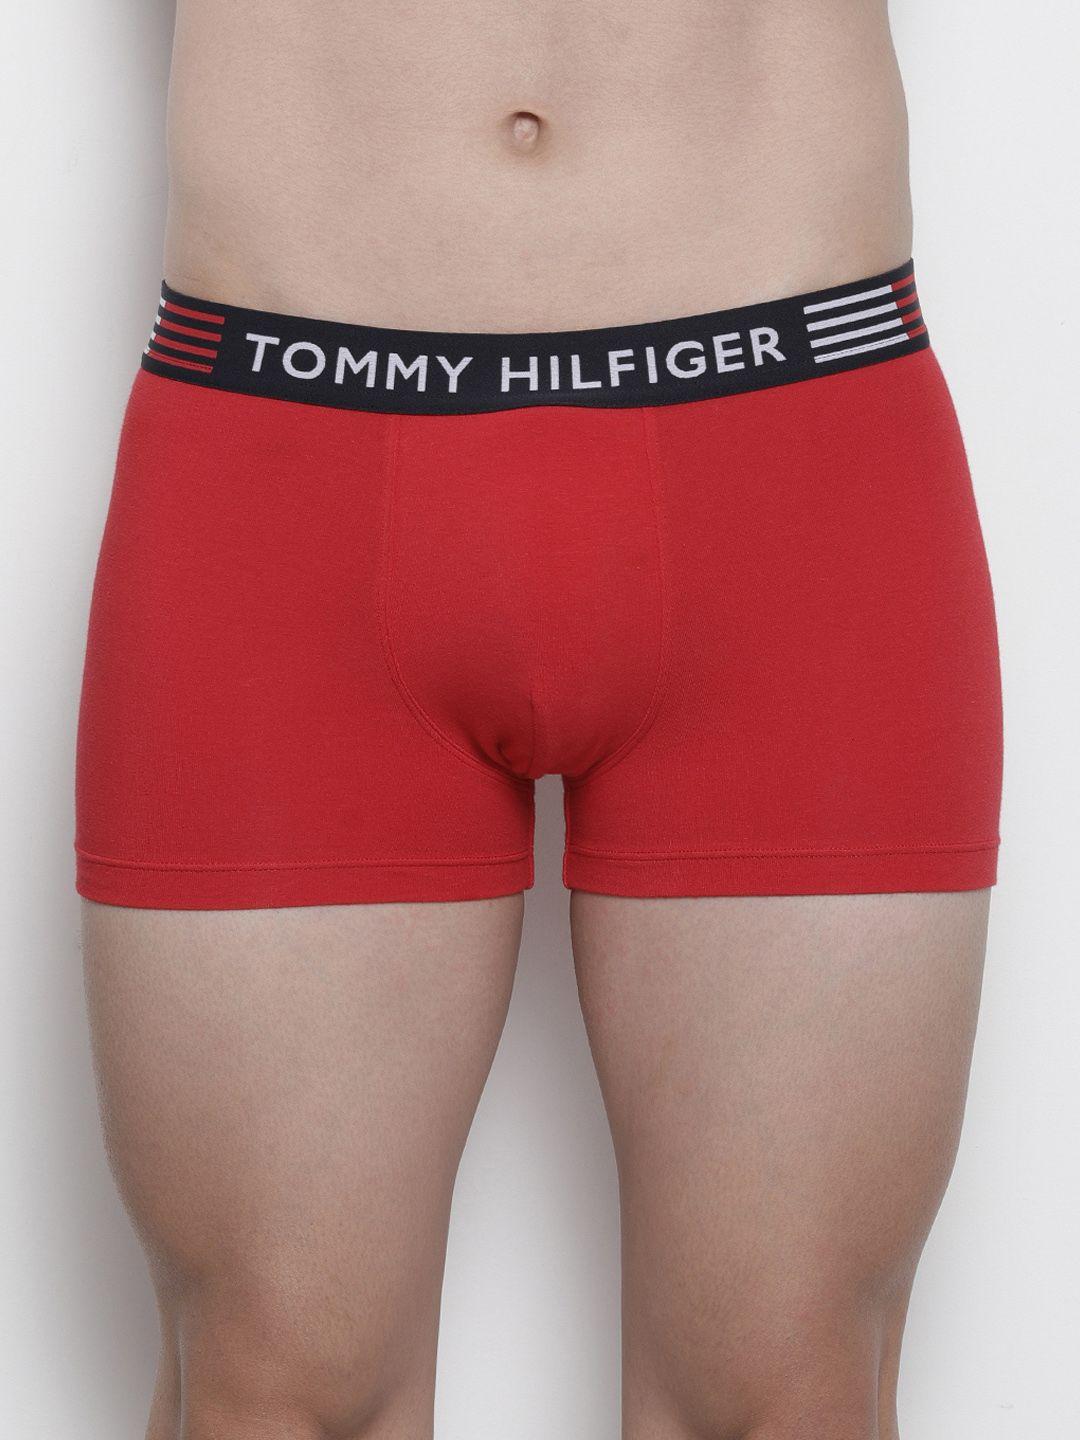 tommy-hilfiger-men-red-solid-trunk-p2ab4153